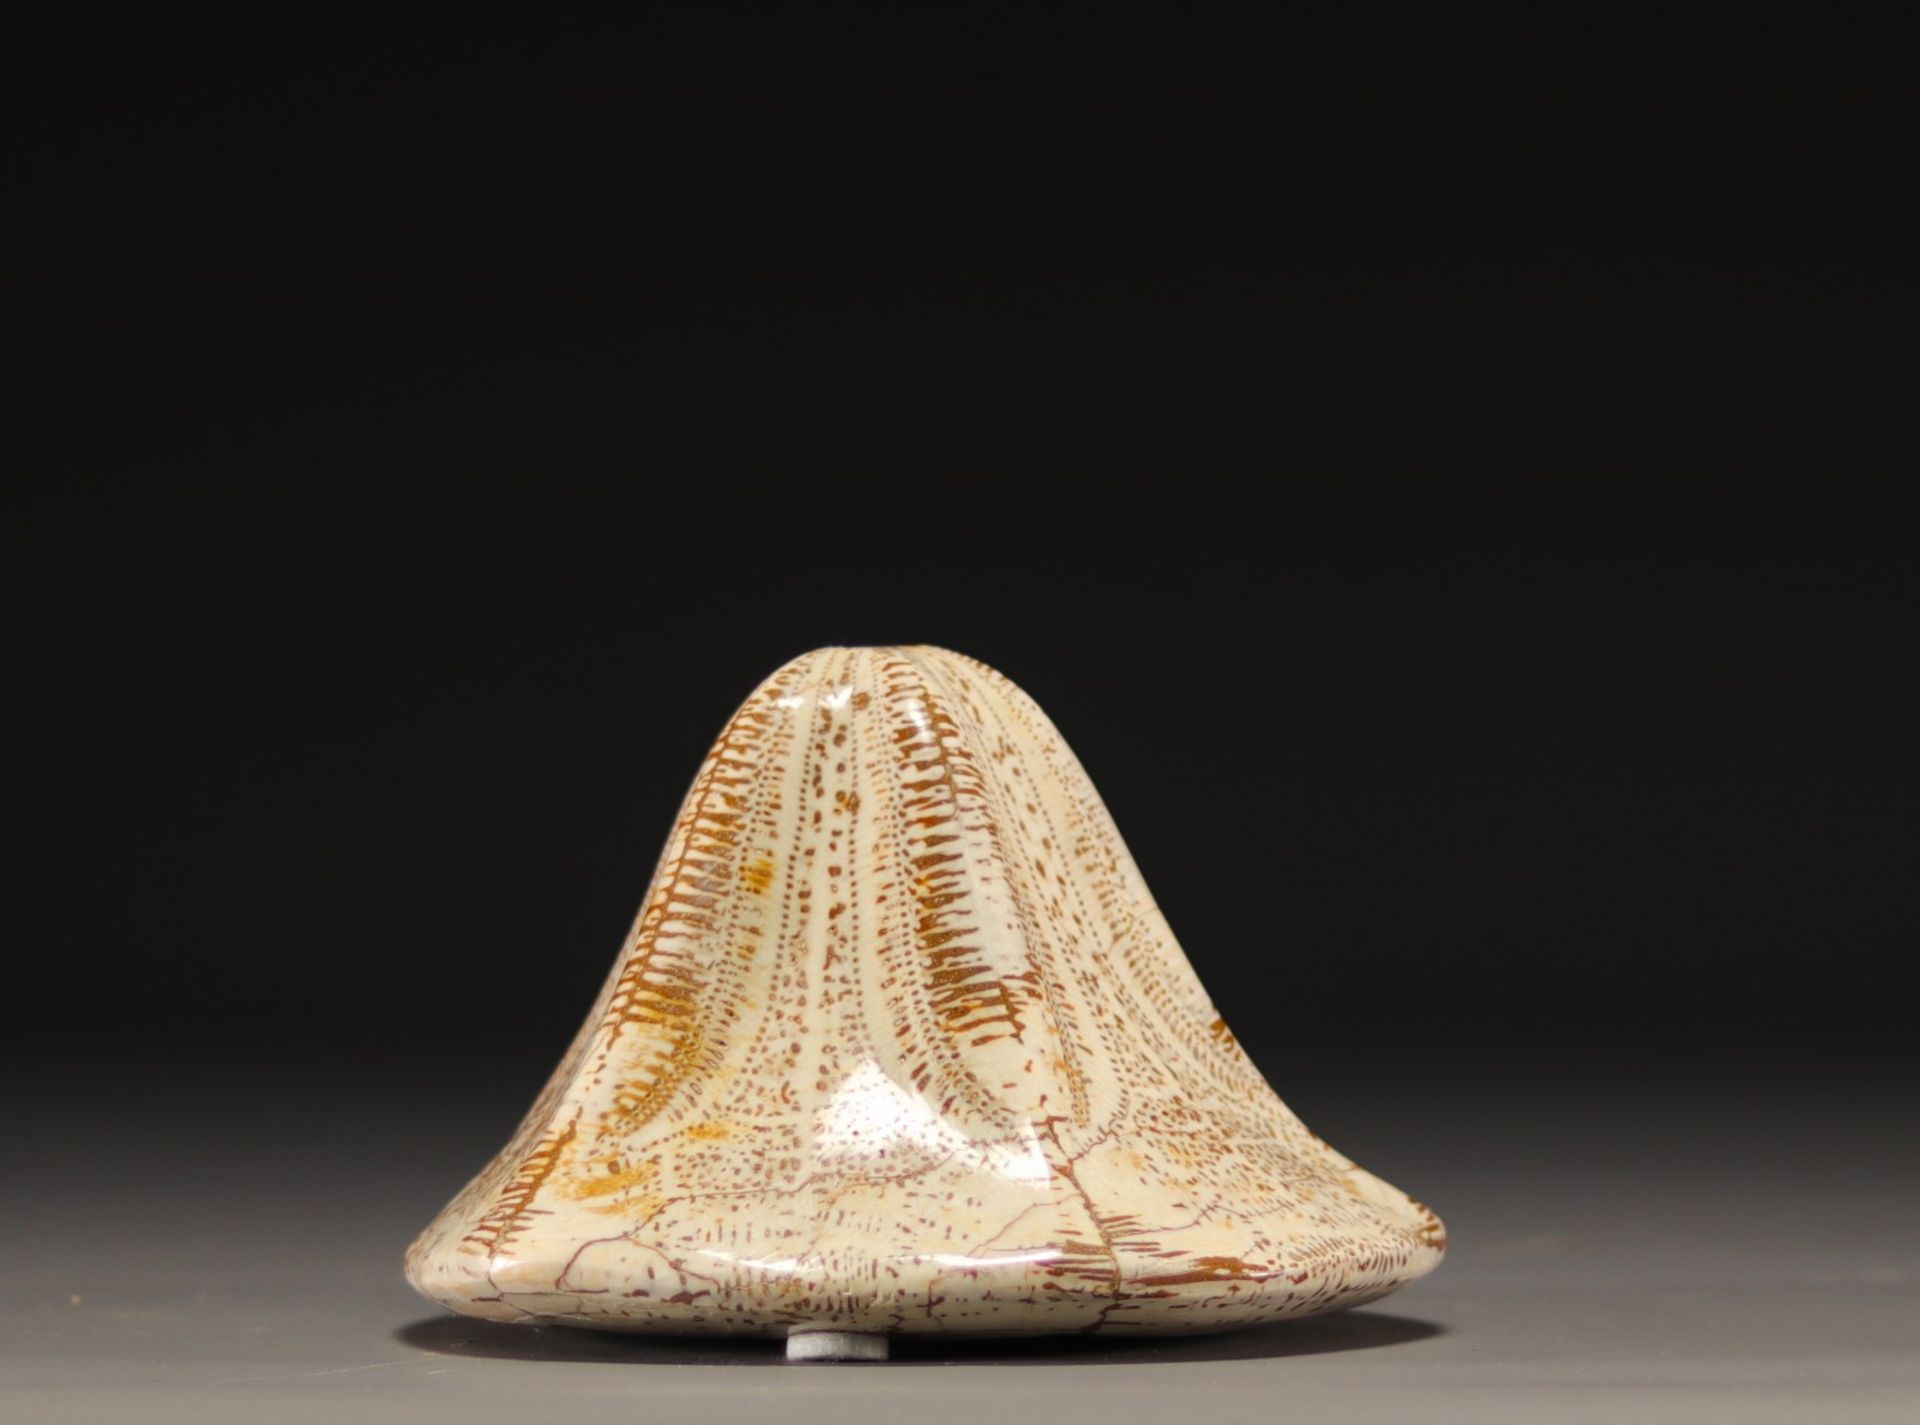 Fossilized and polished sea sponge